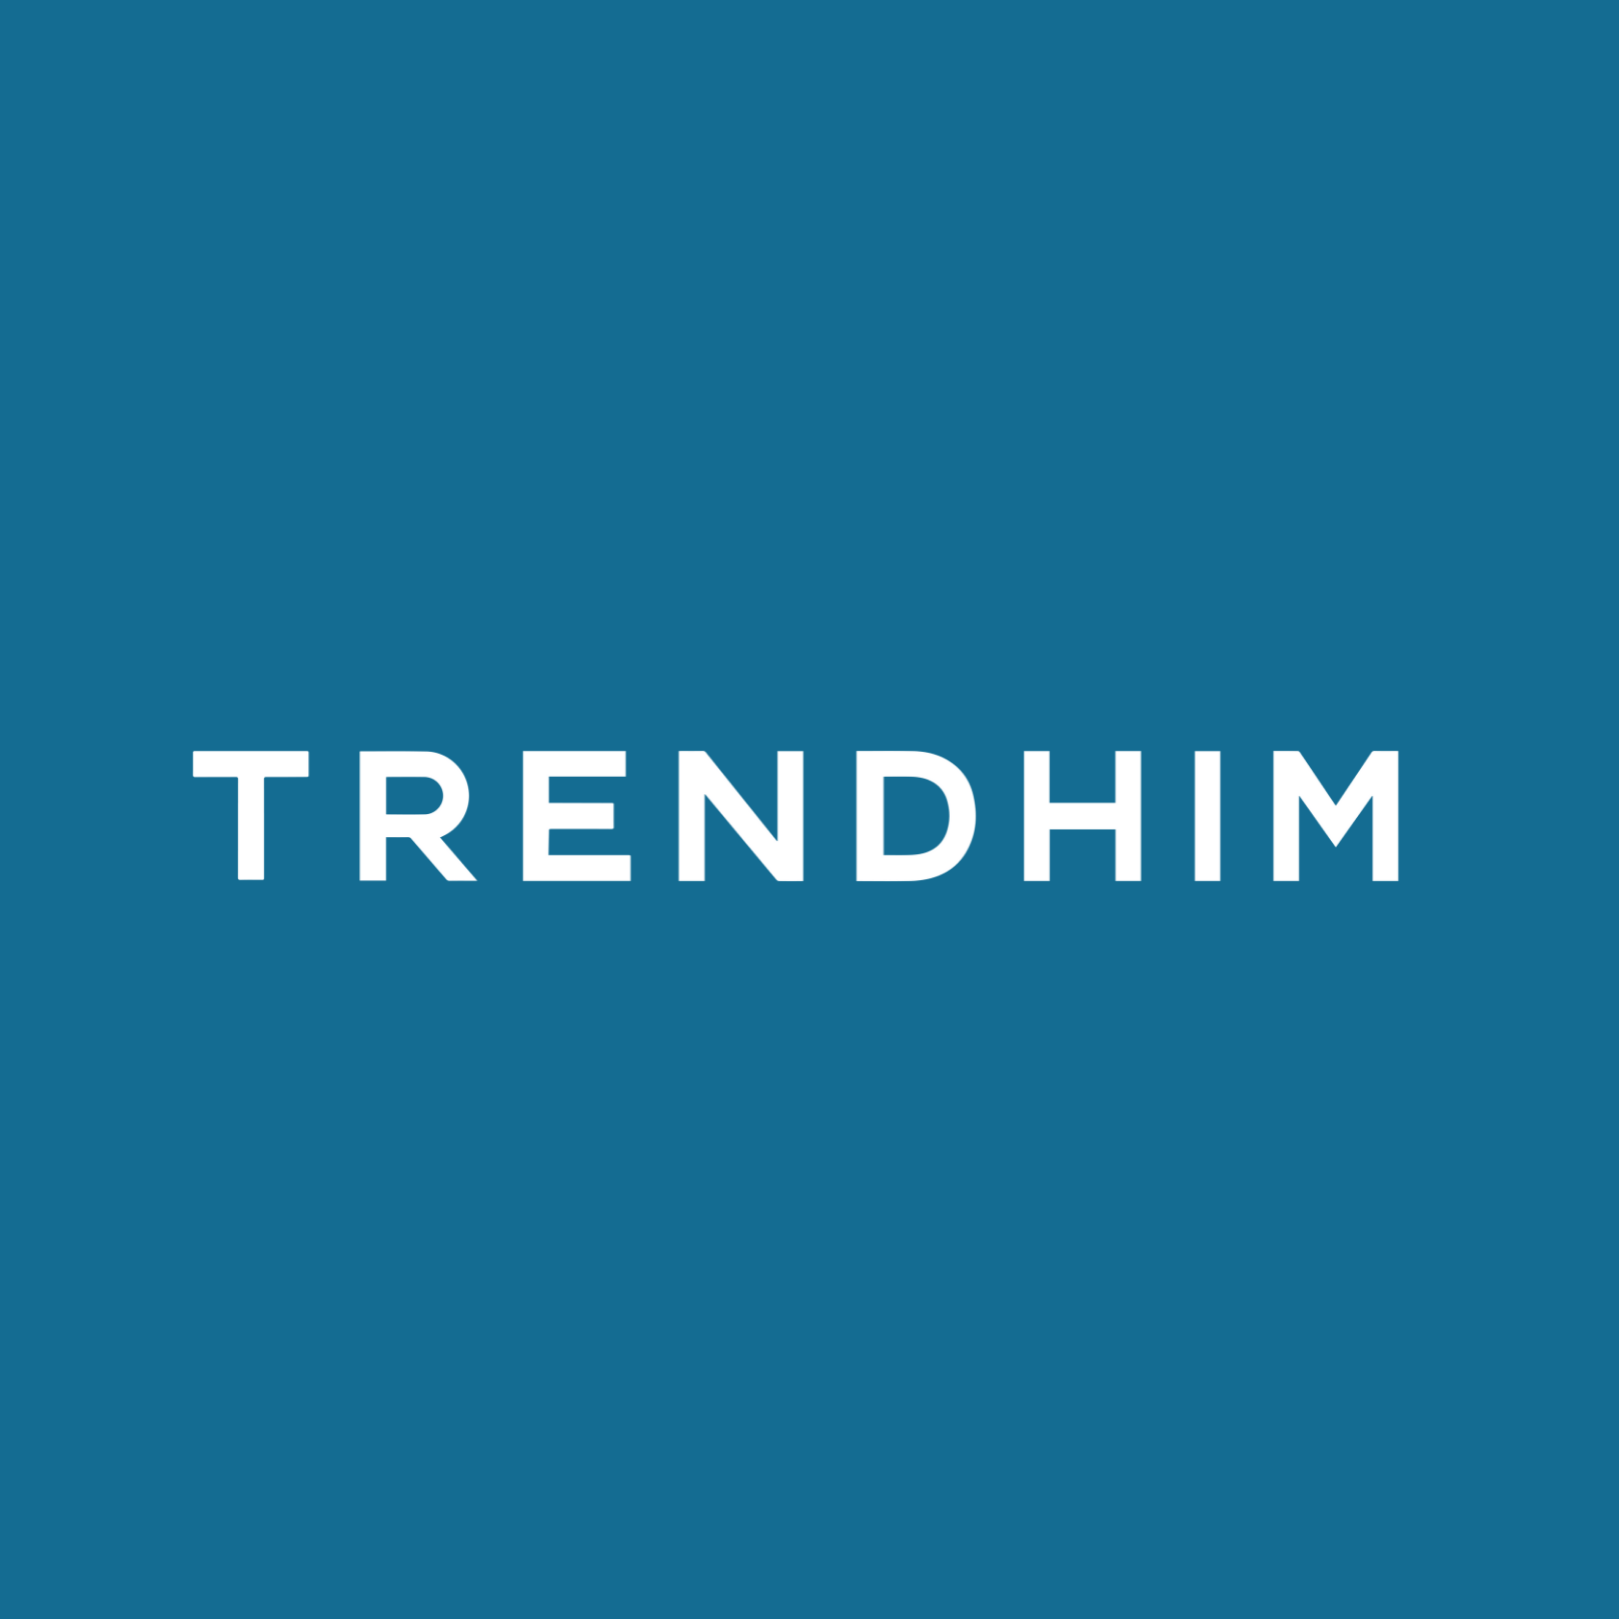 Trendhim - logo